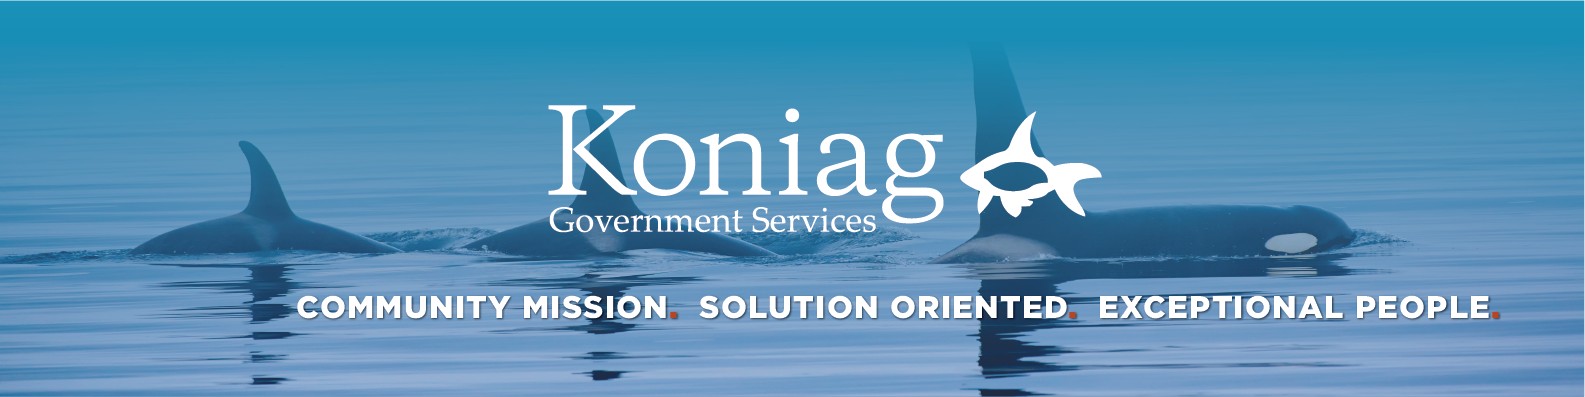 Koniag Government Services | LinkedIn